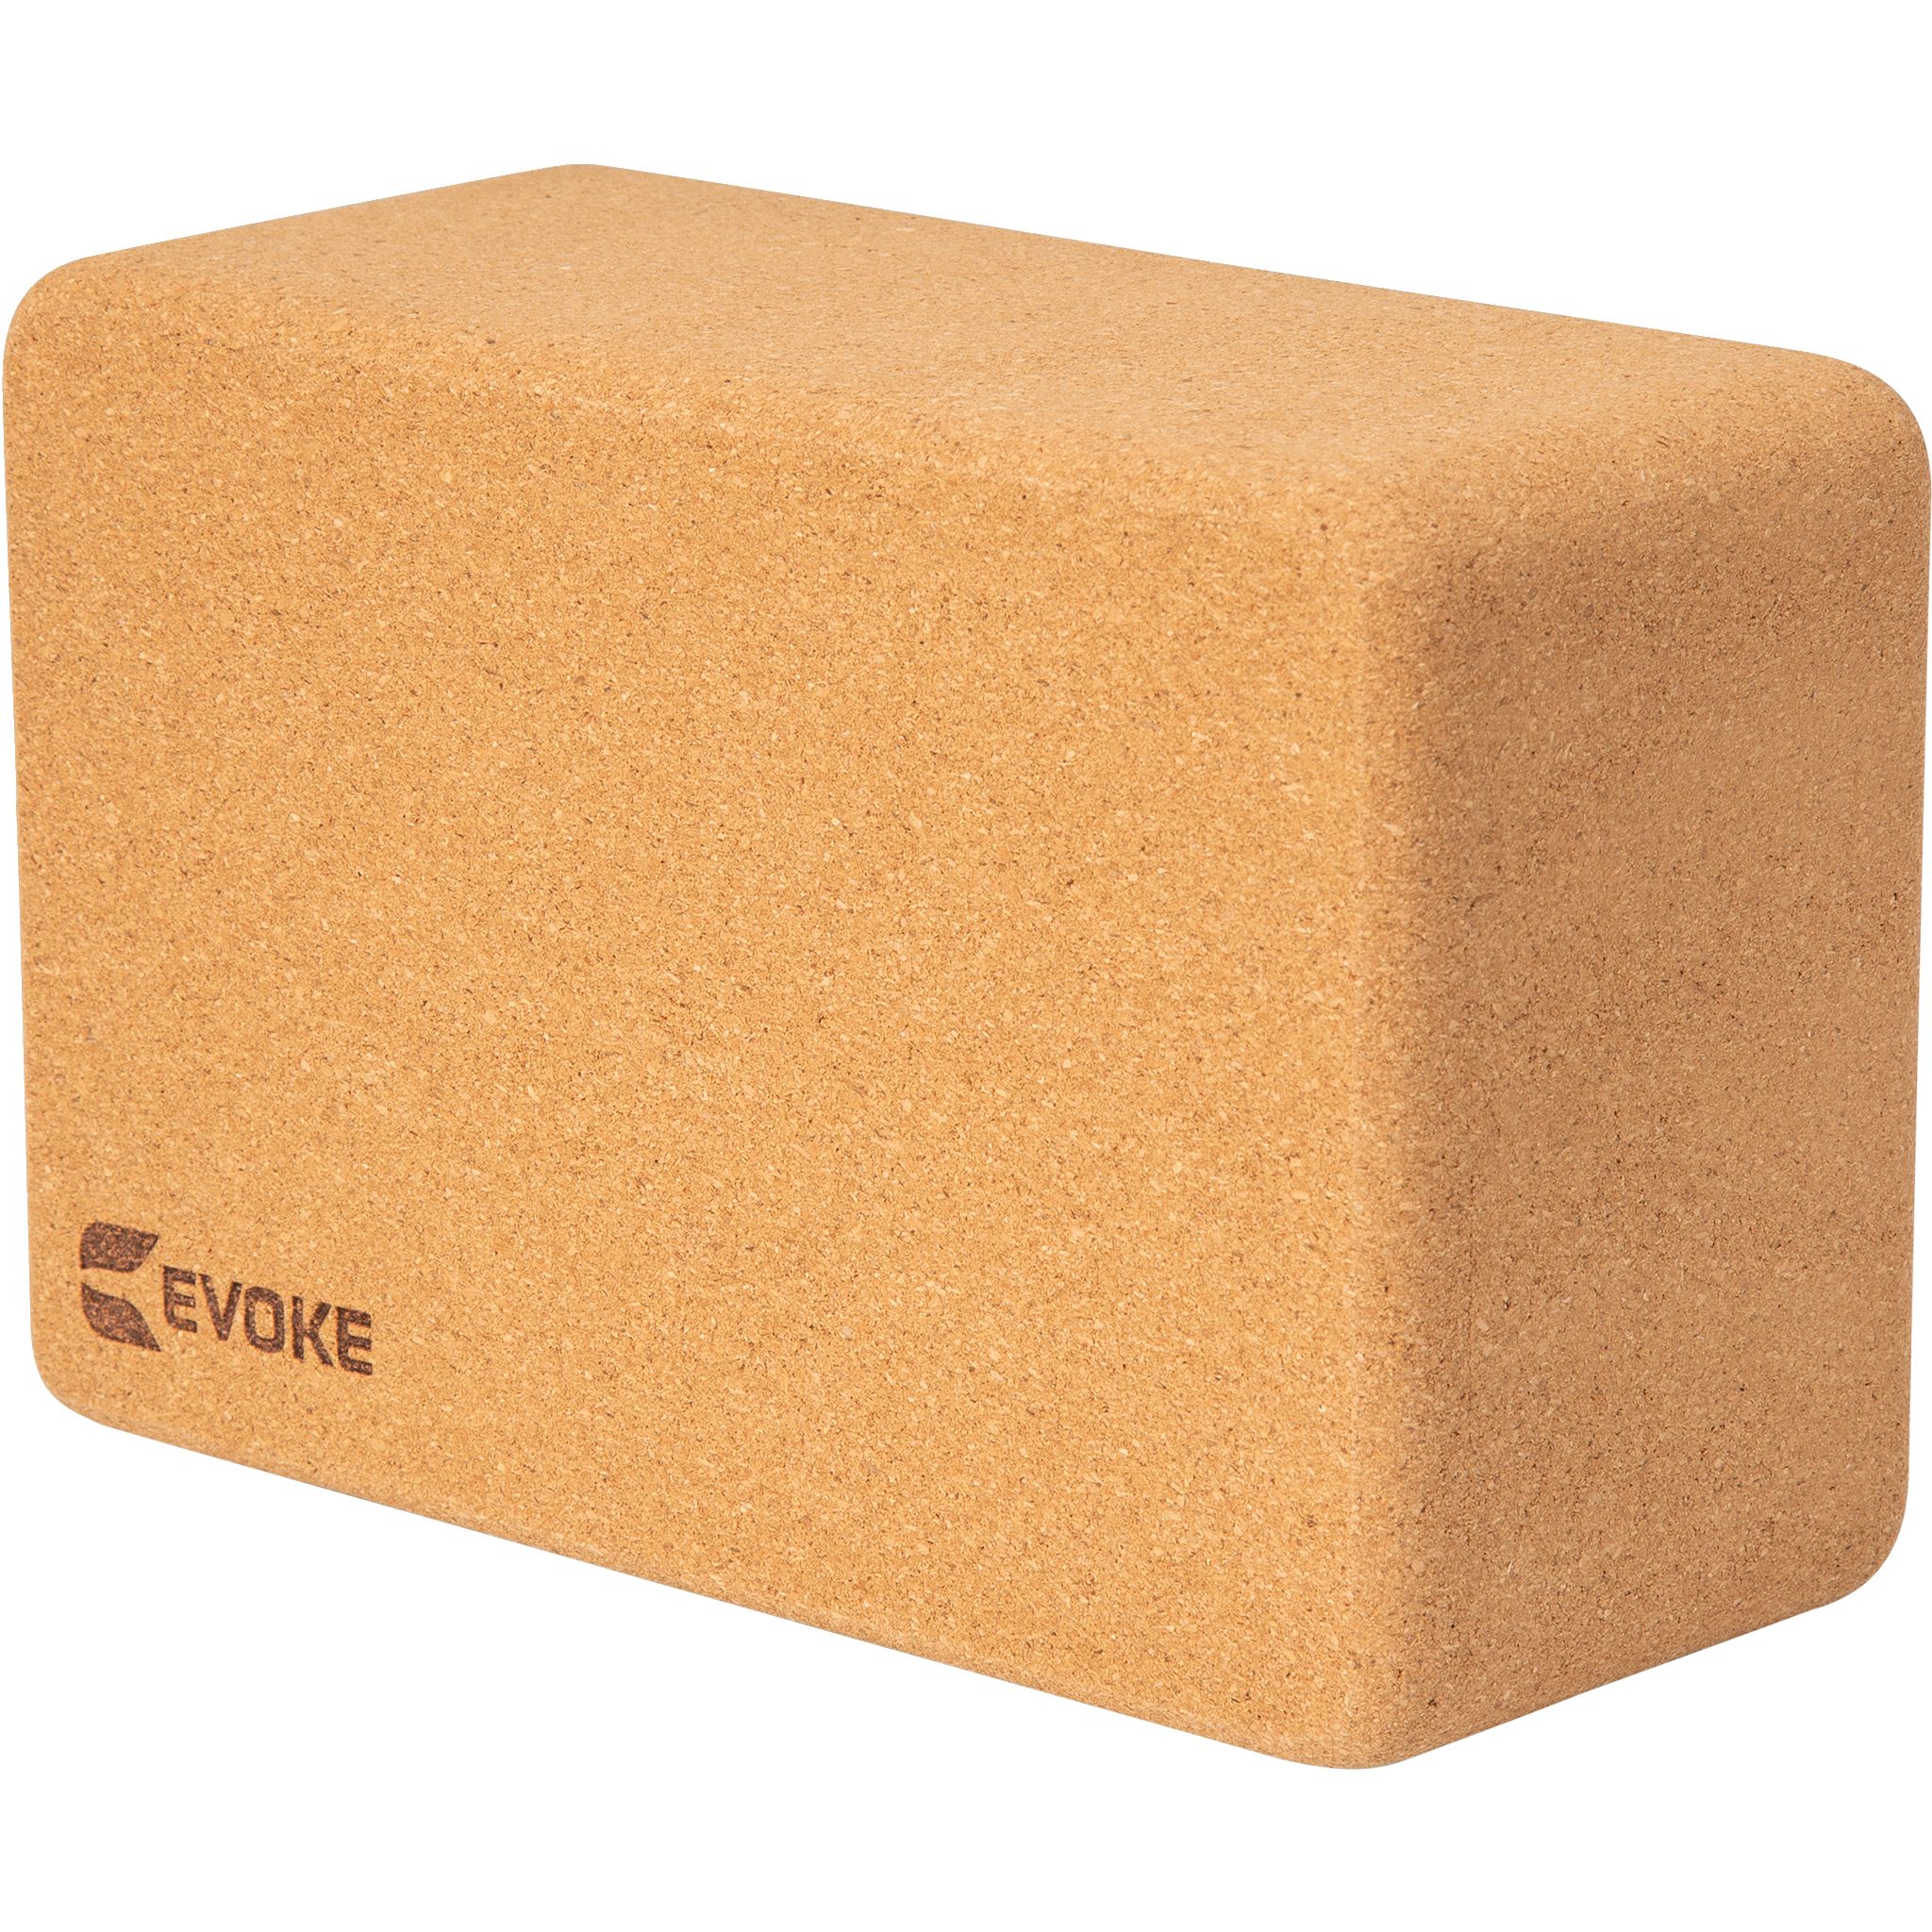 Image of Evoke Cork Yoga Block